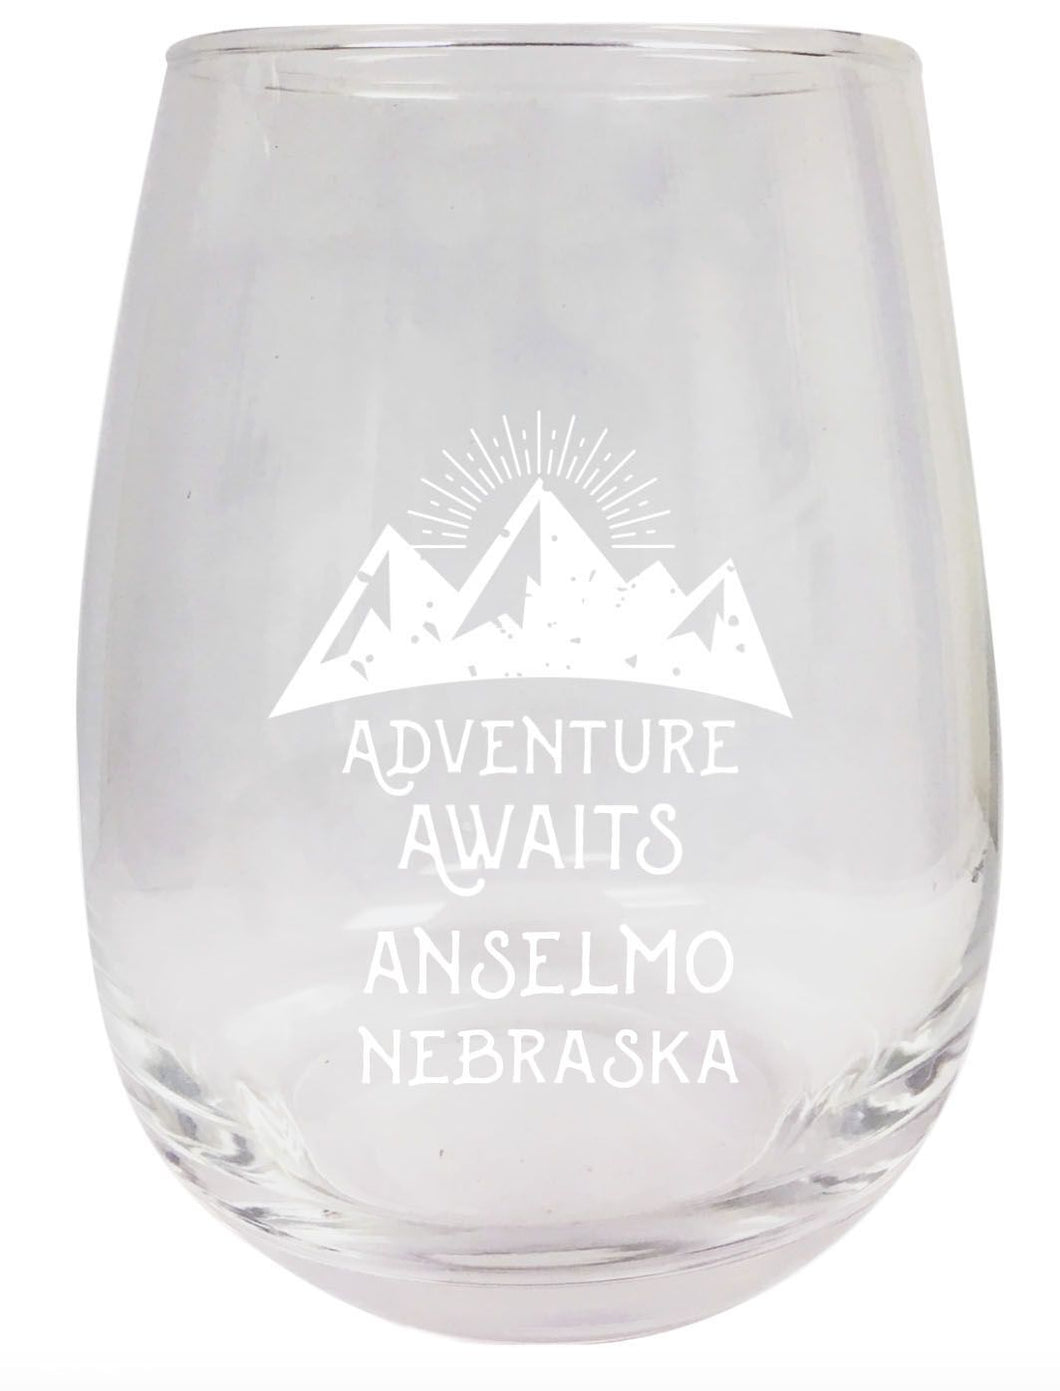 Nebraska Engraved Stemless Wine Glass Duo